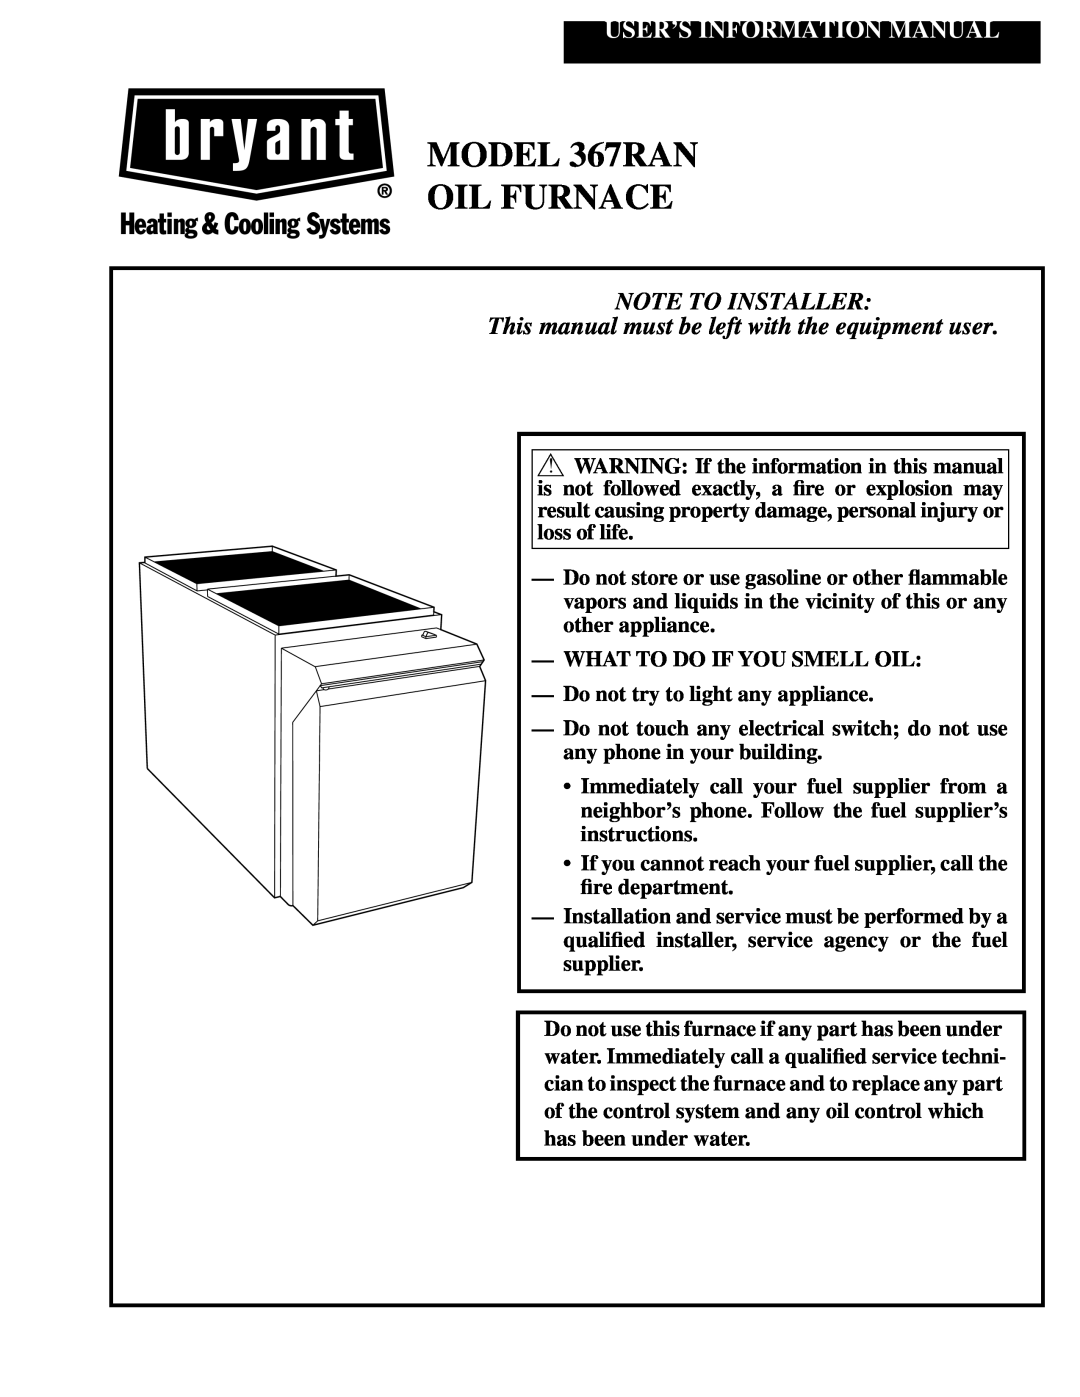 Bryant manual MODEL 367RAN OIL FURNACE, User’S Information Manual, Note To Installer 